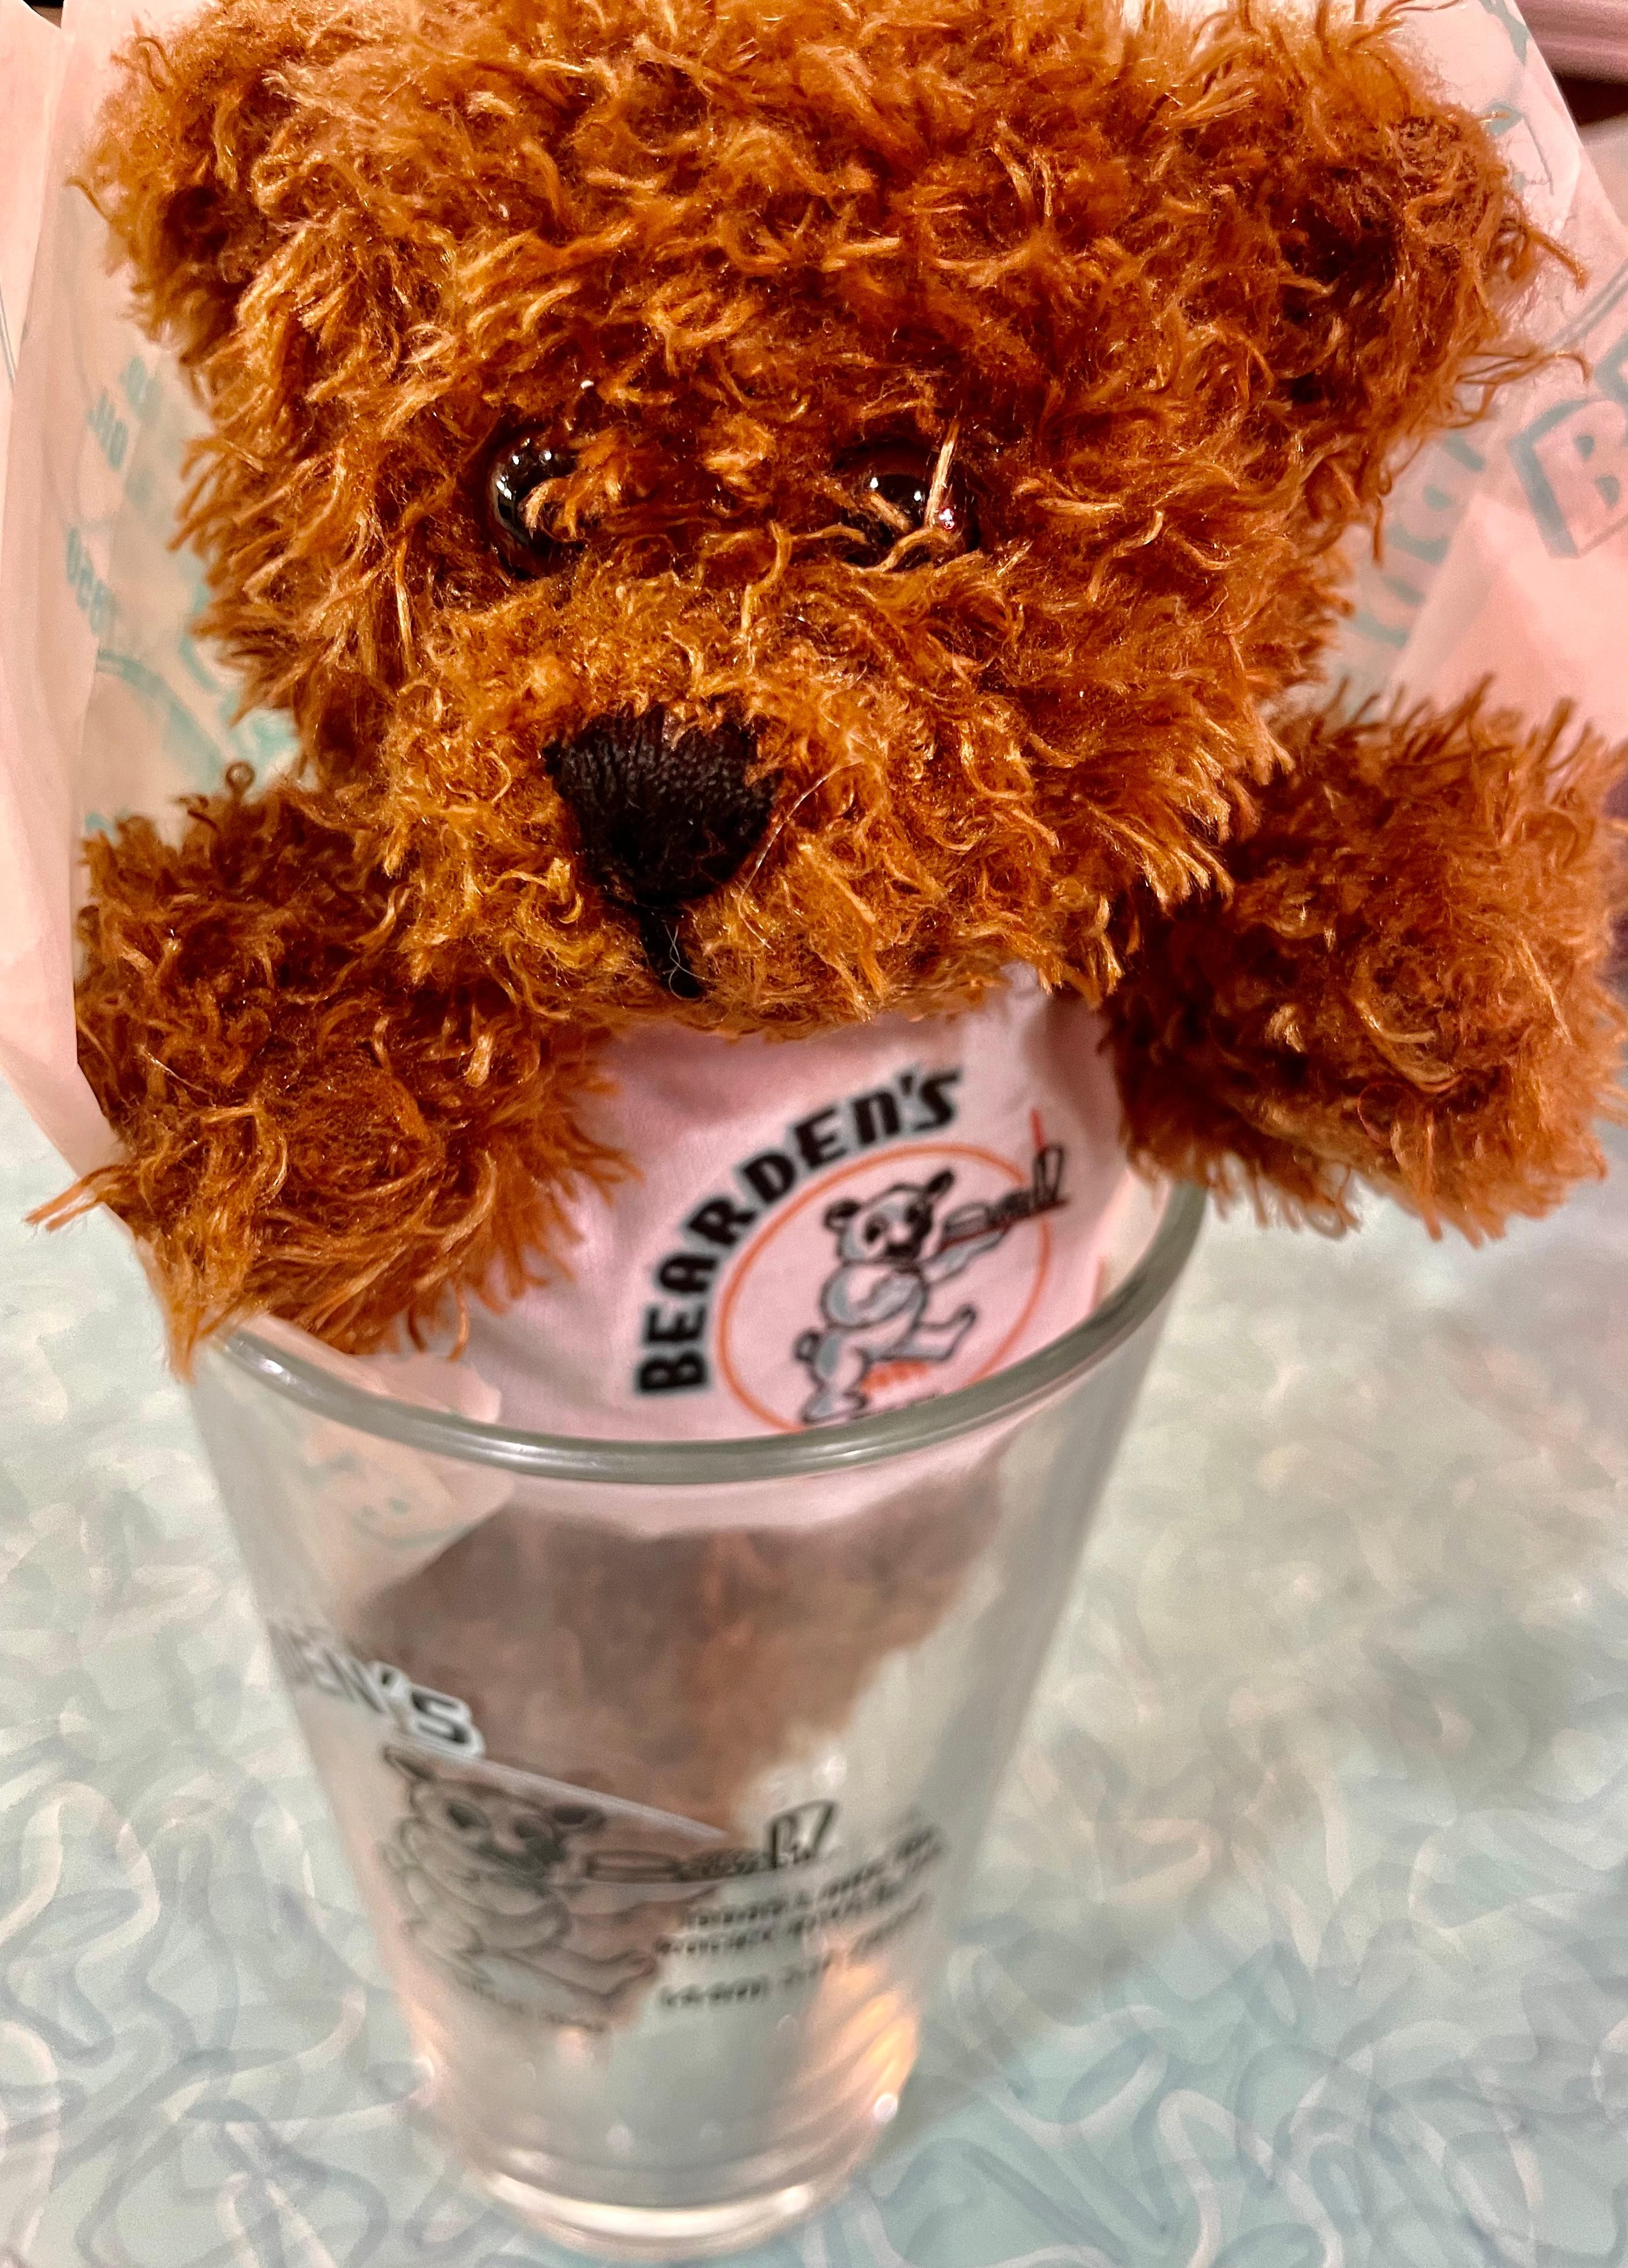 Beer glass/ Teddy Bear combo